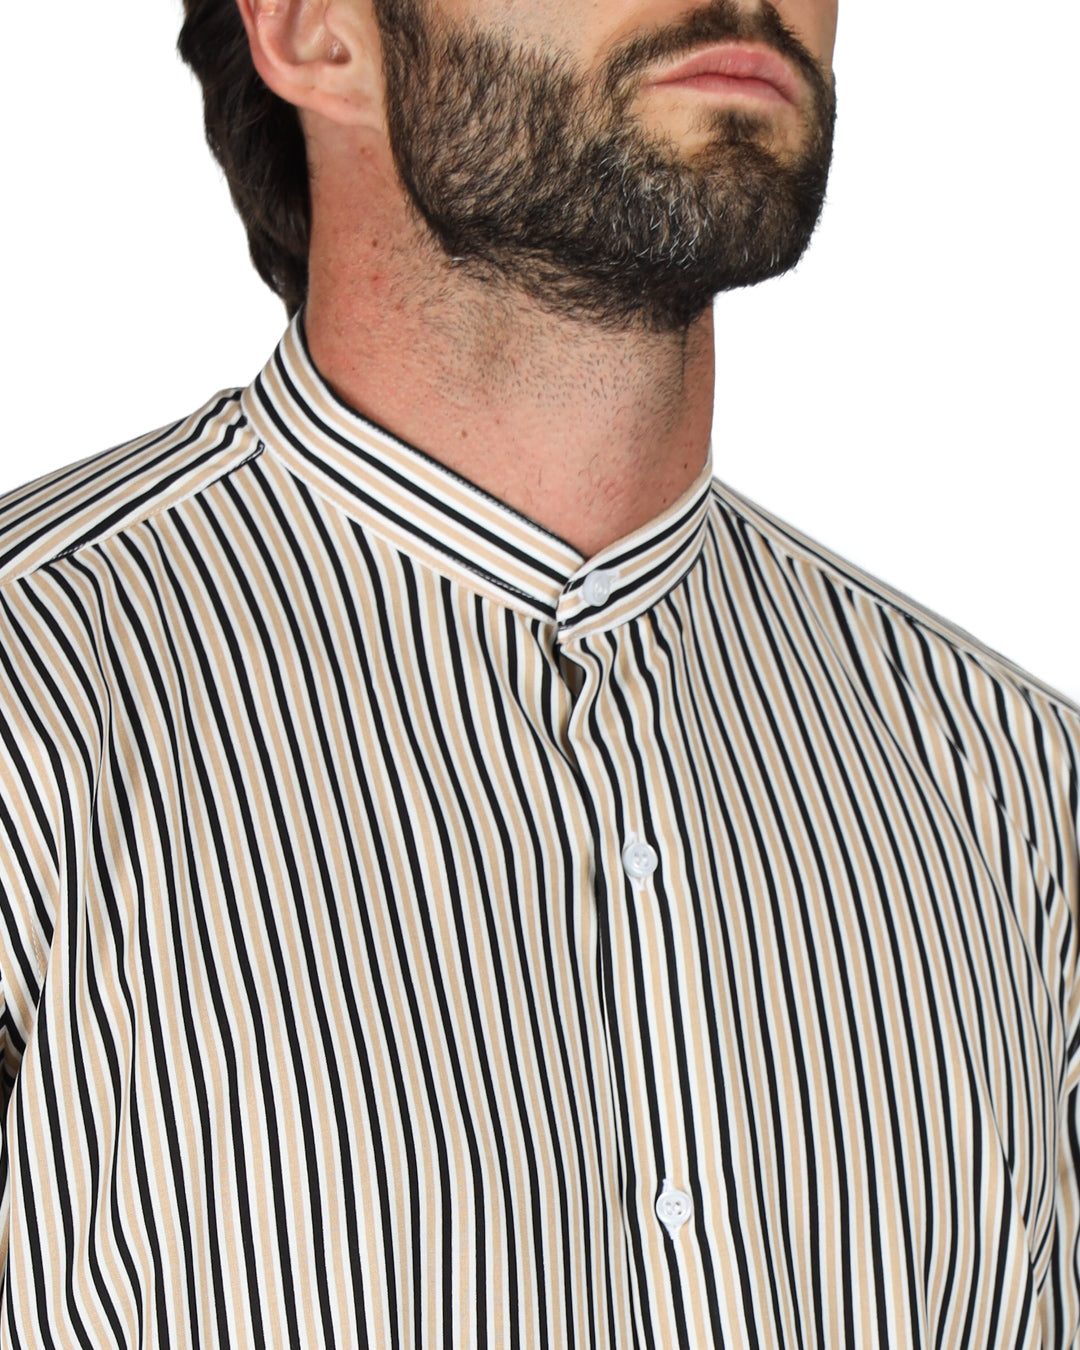 Barbuda - Beige striped patterned Korean shirt